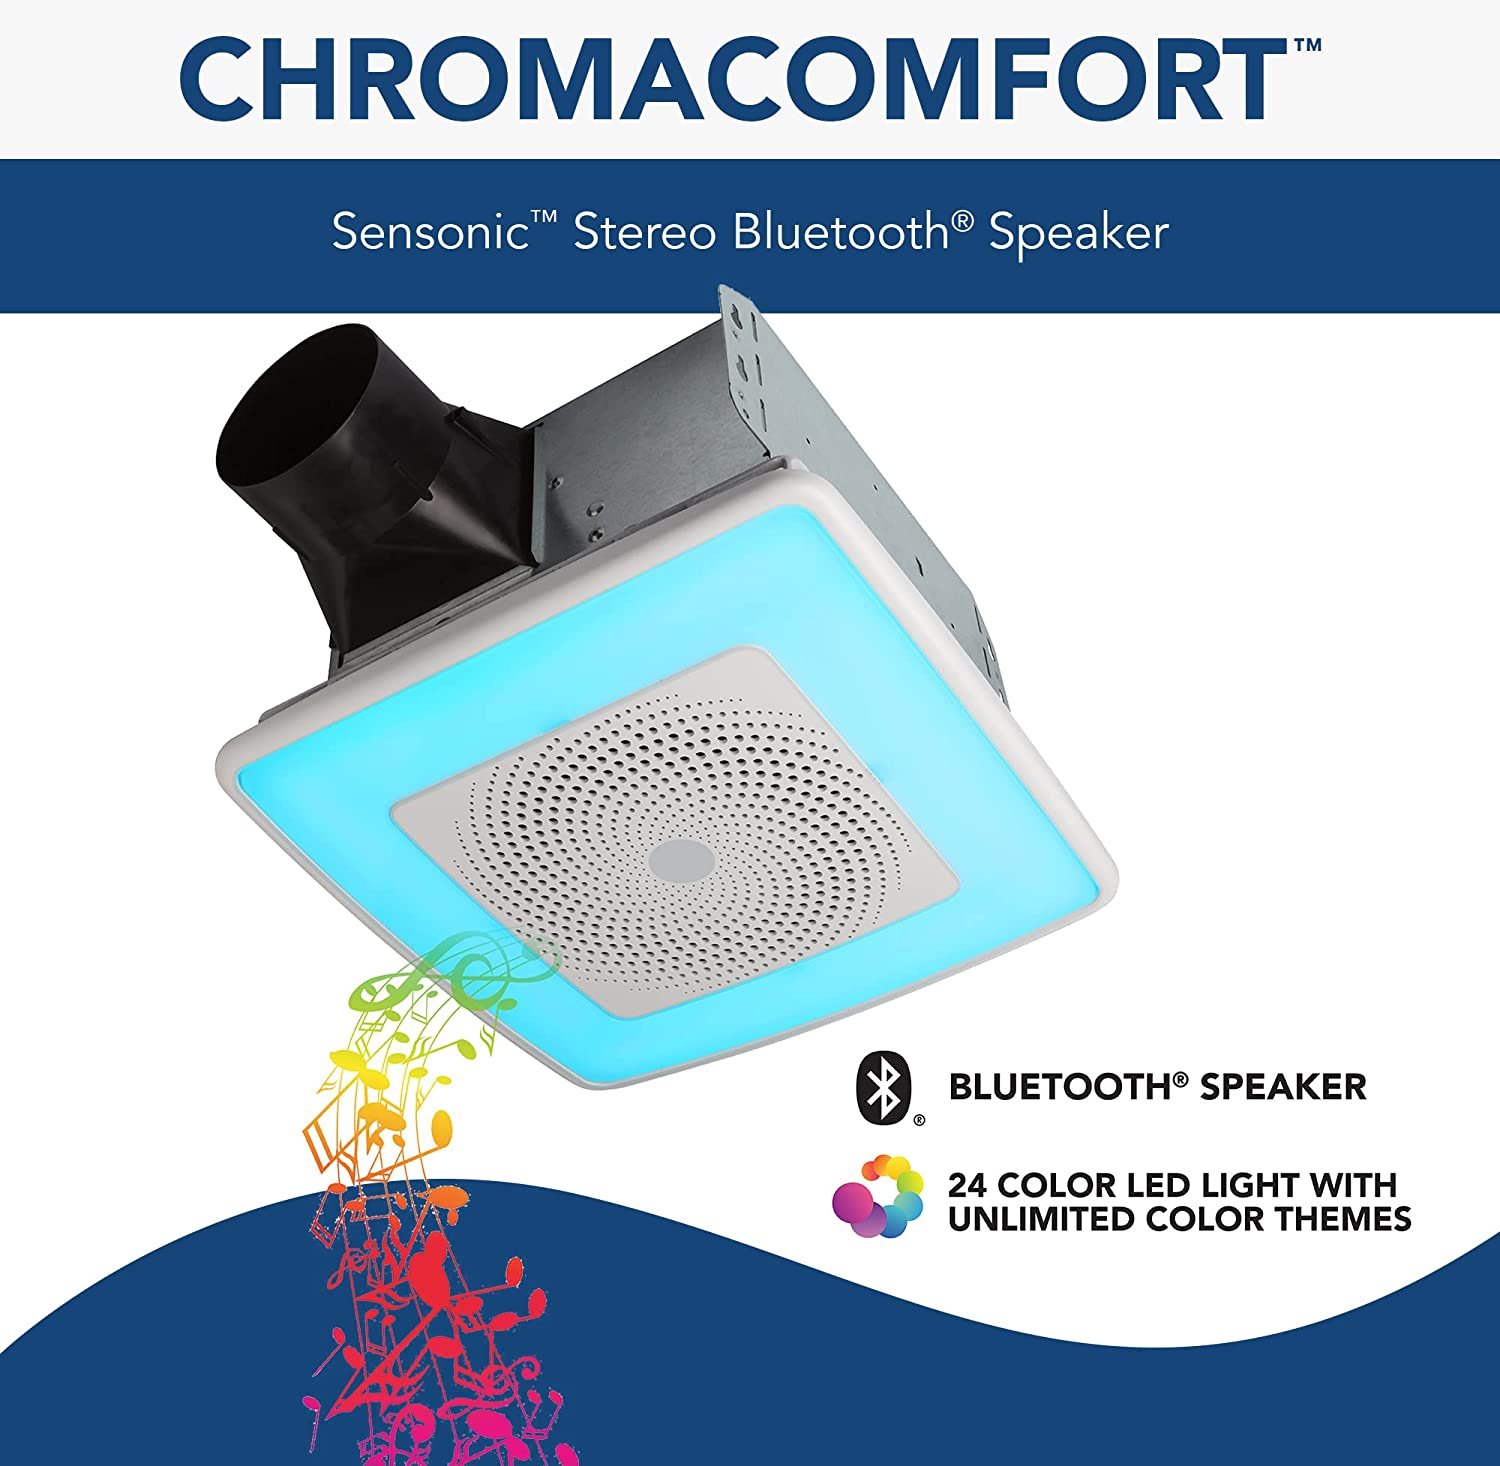 Broan-NuTone SPK110RGBL ChromaComfort Bathroom Exhaust Fan with Sensonic Bluetooth Speaker and LED Light, White - image 2 of 6